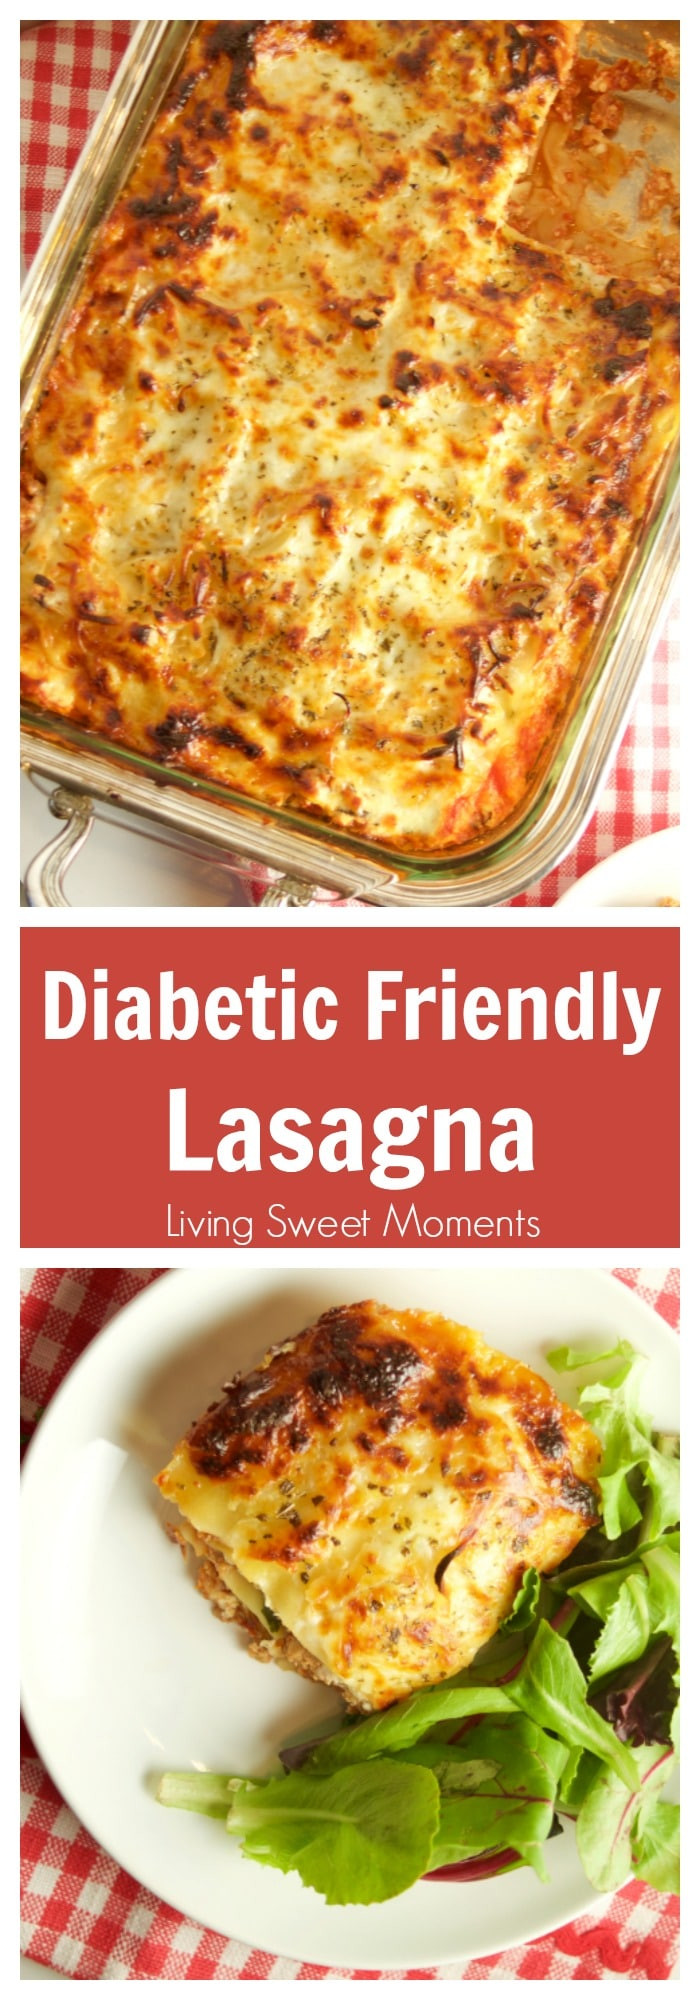 Diabetic Easy Recipes
 Diabetic Lasagna Recipe Living Sweet Moments